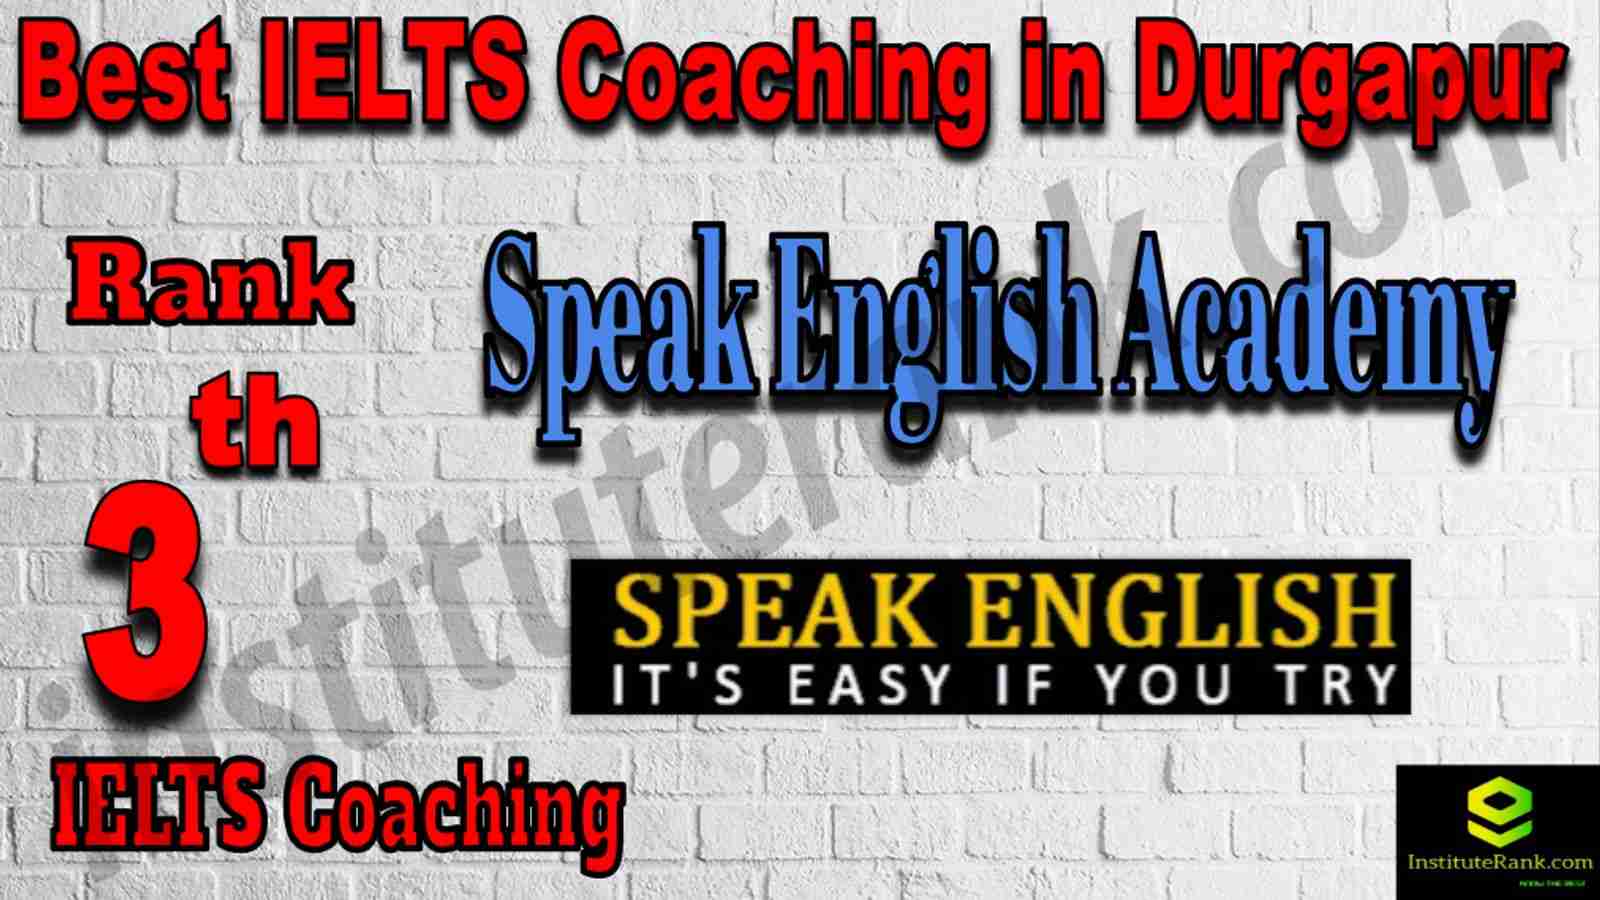 3rd Best IELTS Coaching in Durgapur